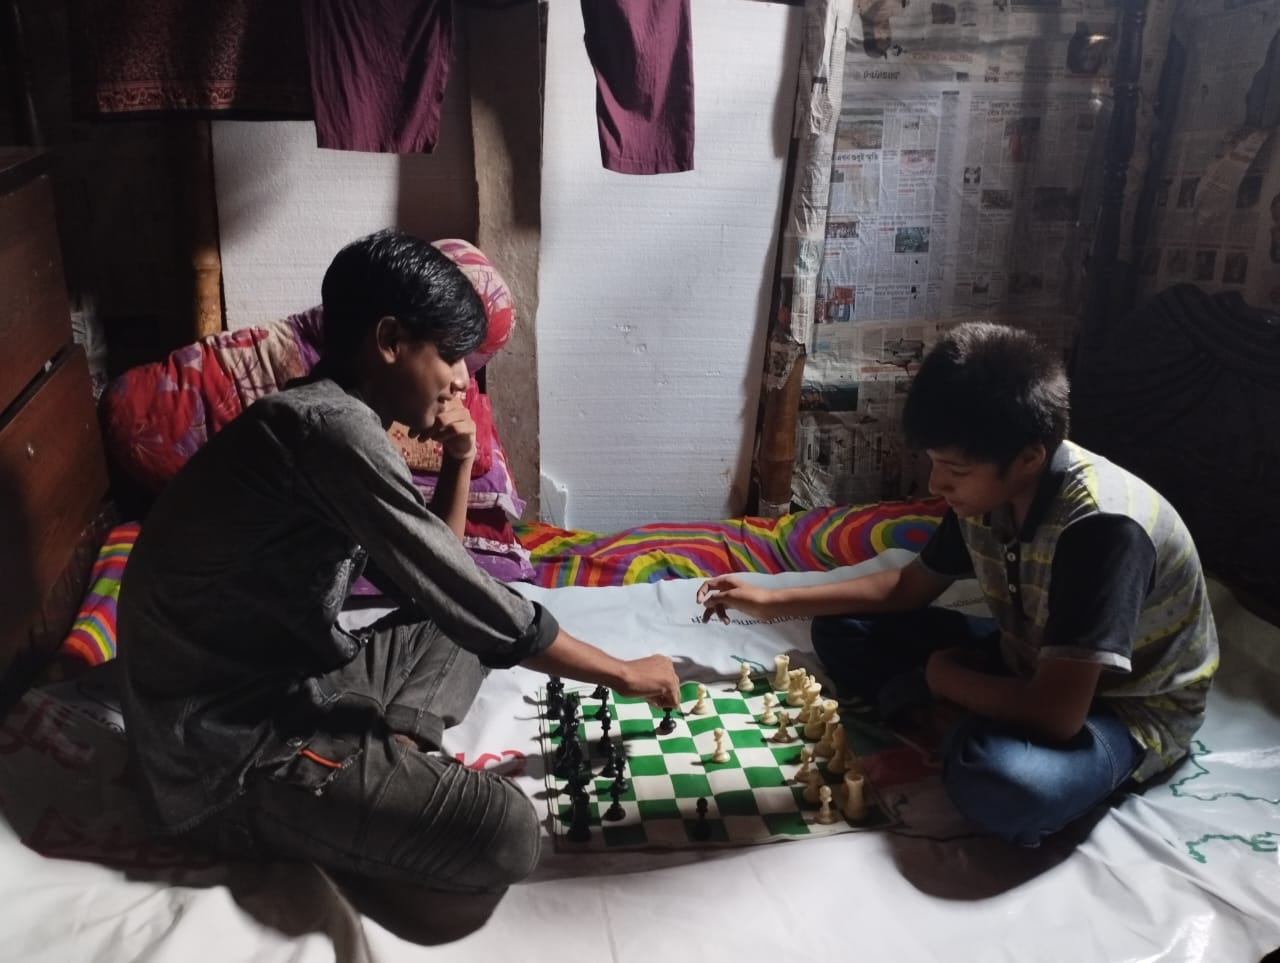 Arman and Shakil playing chess